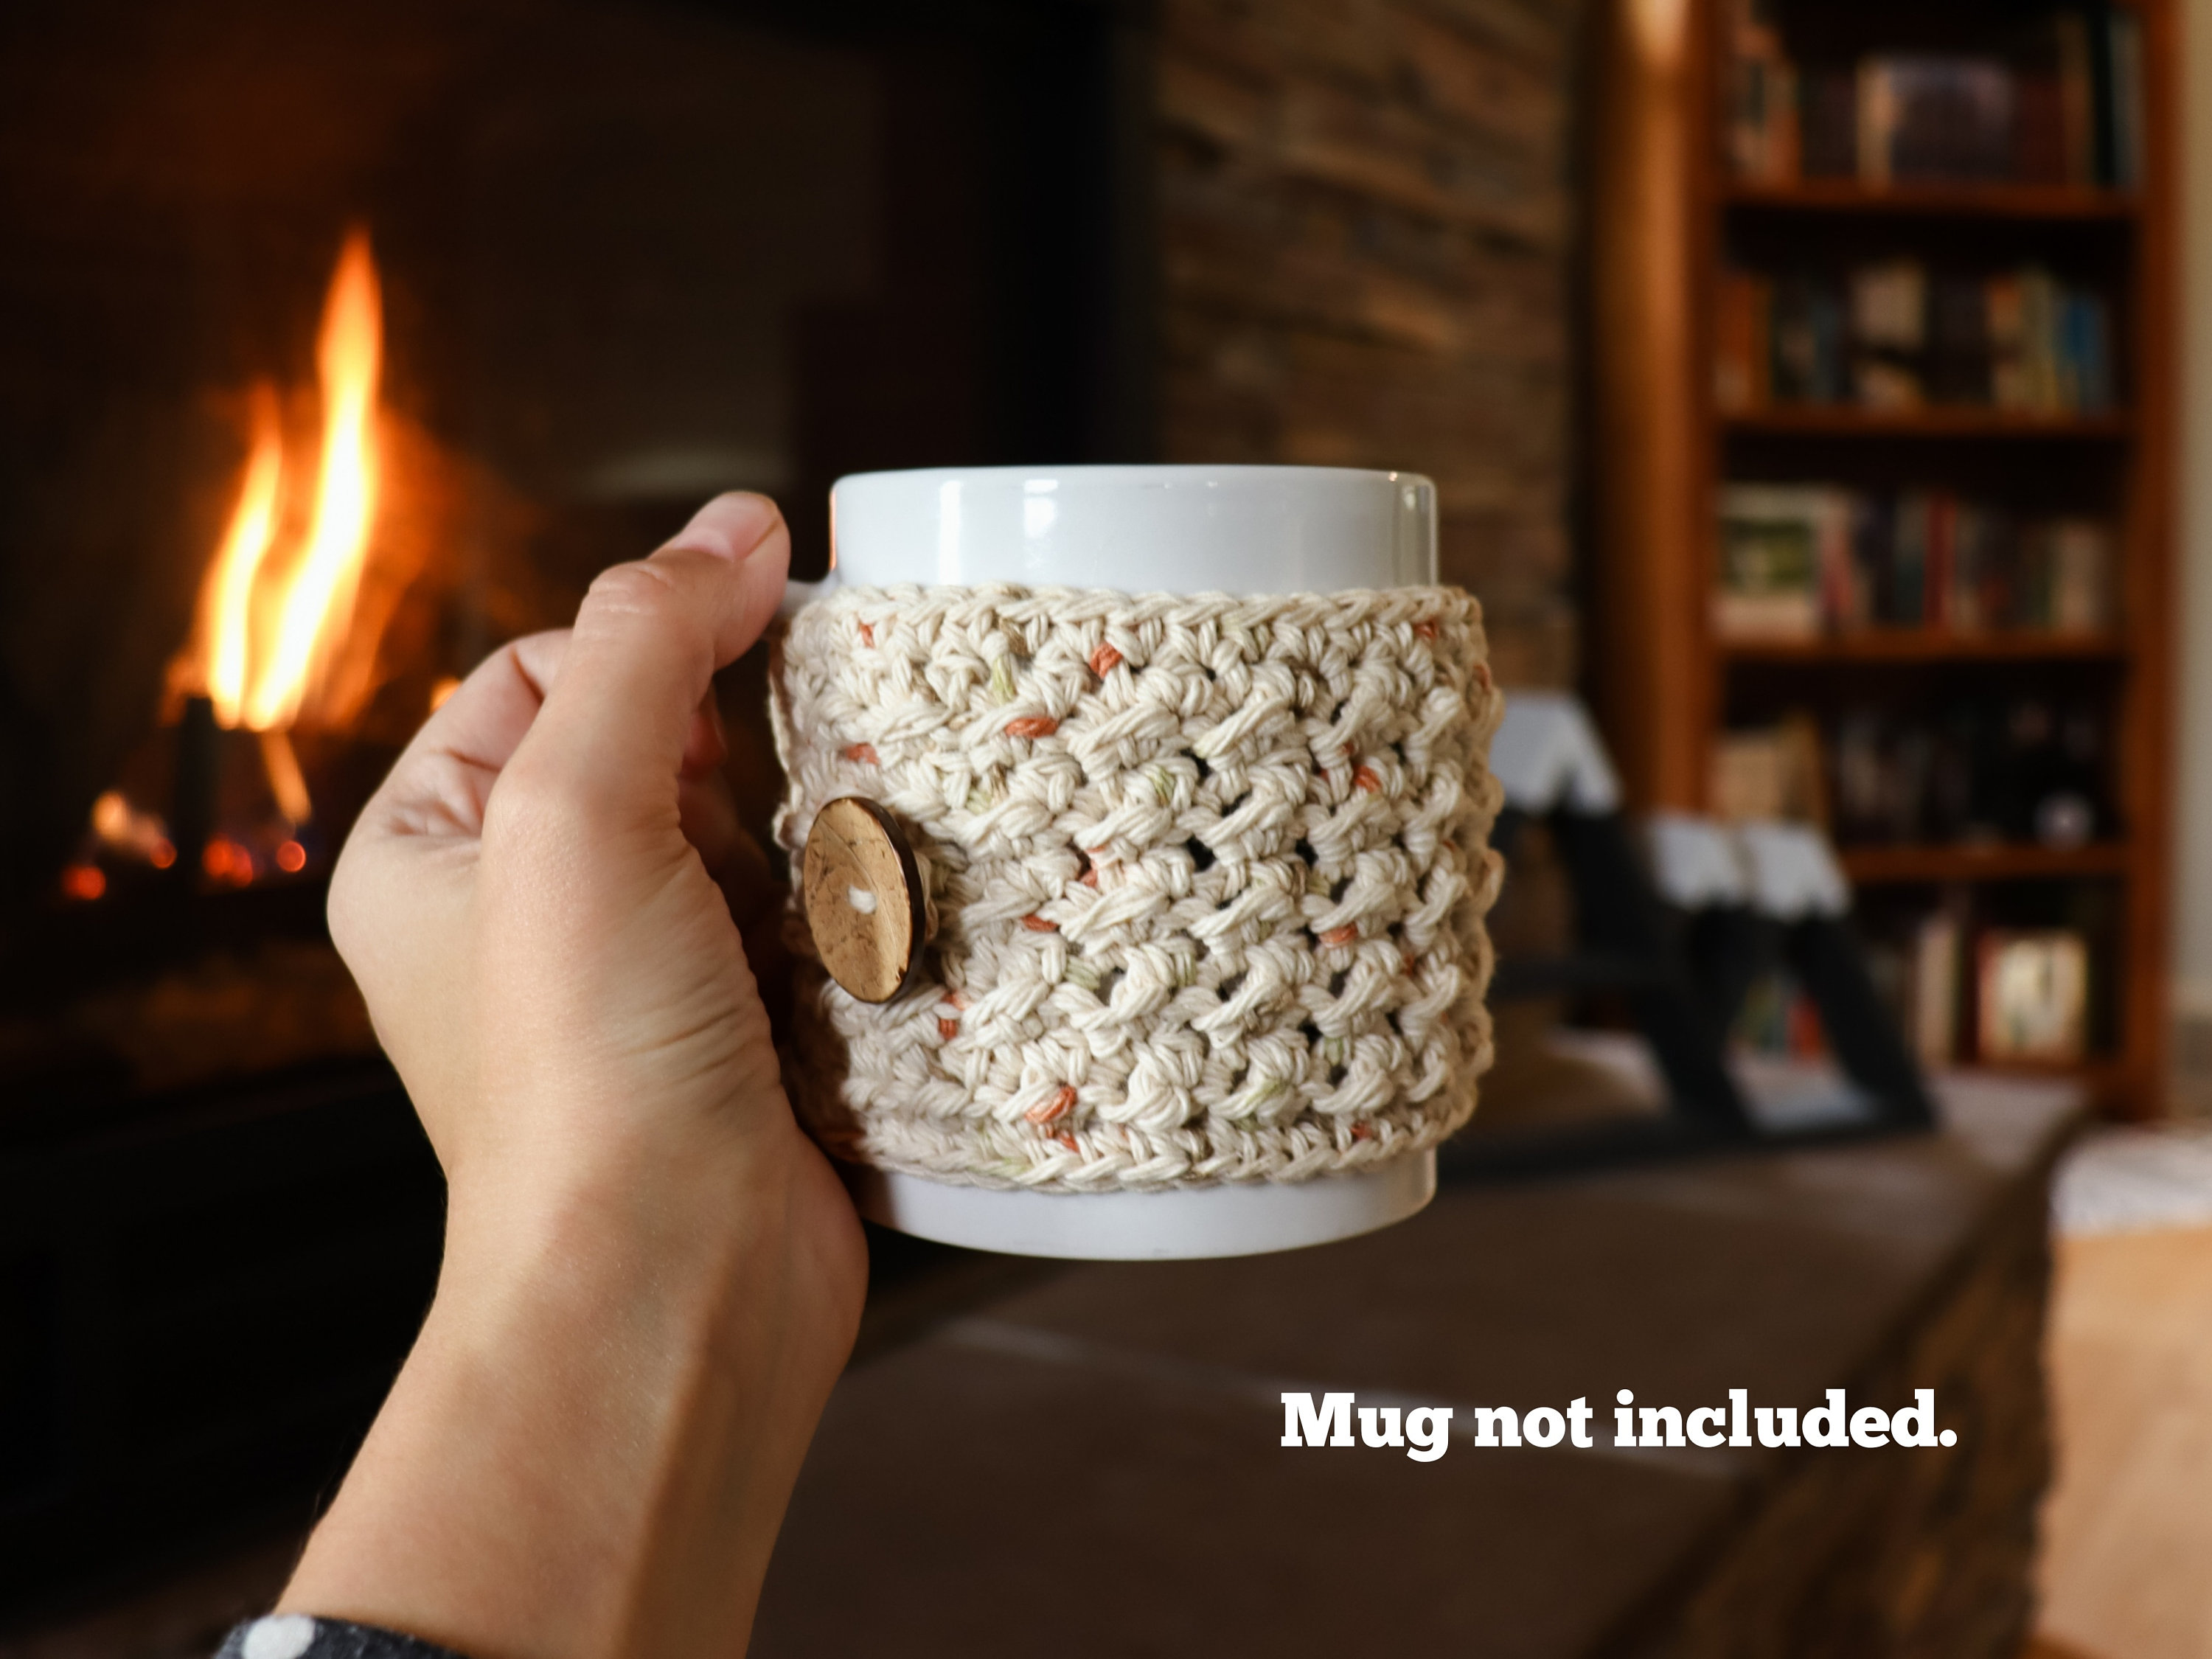 Warm + Cozy Coffee Mug - Coffee and Mug Gift Set – Giften Market